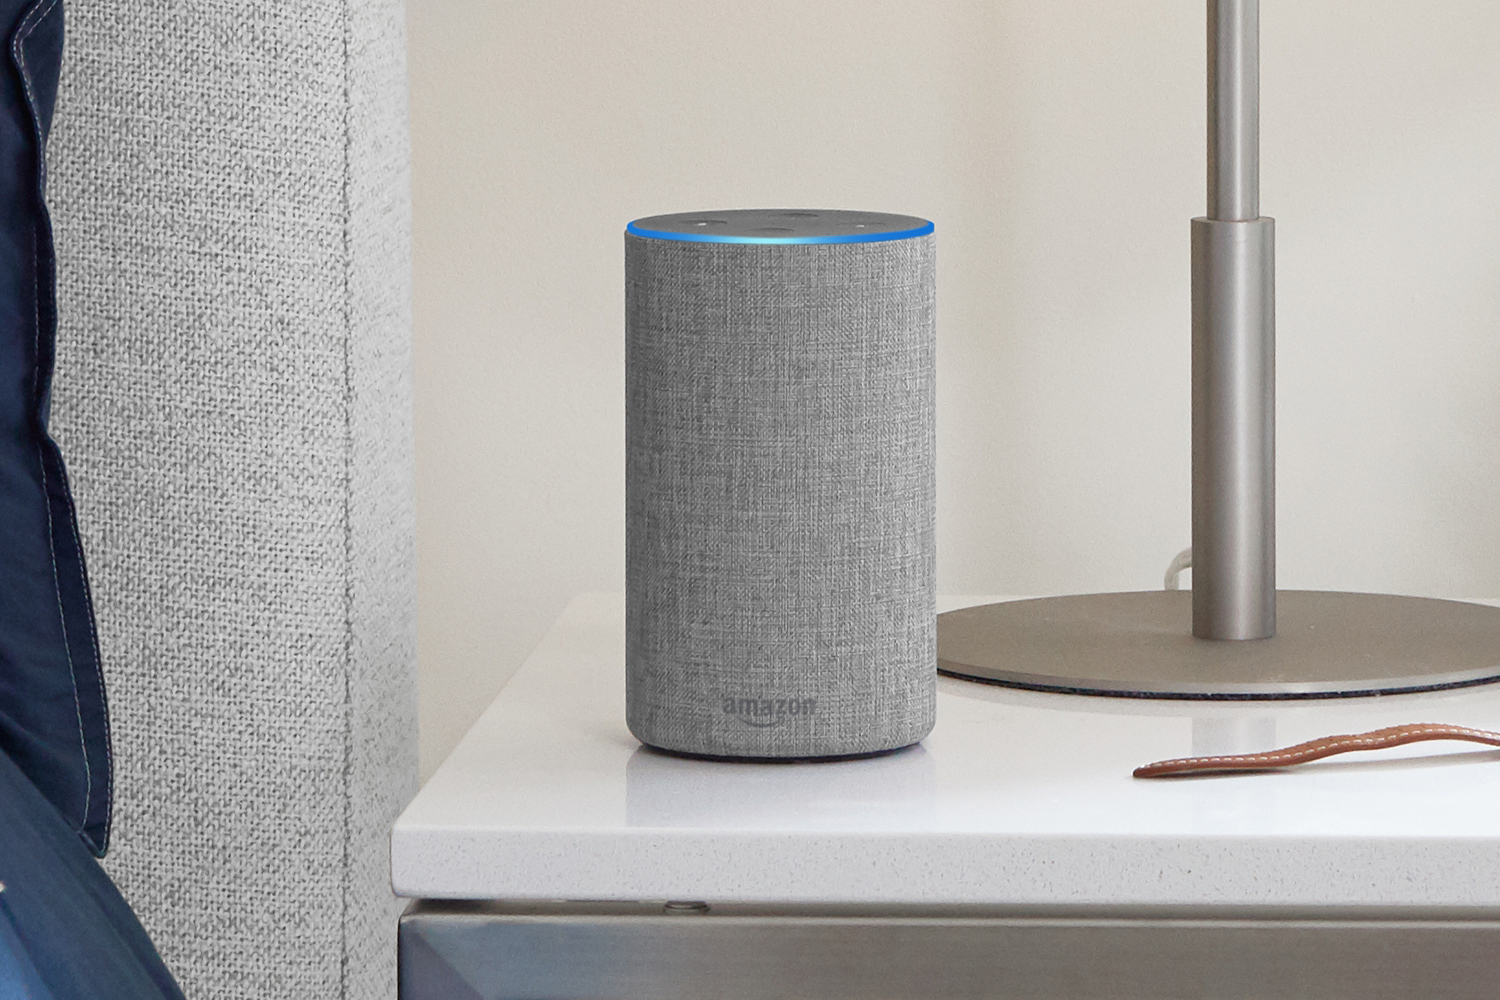 Echo Plus, Connect, Spot Bring Alexa to Every Room, Zigbee, 911